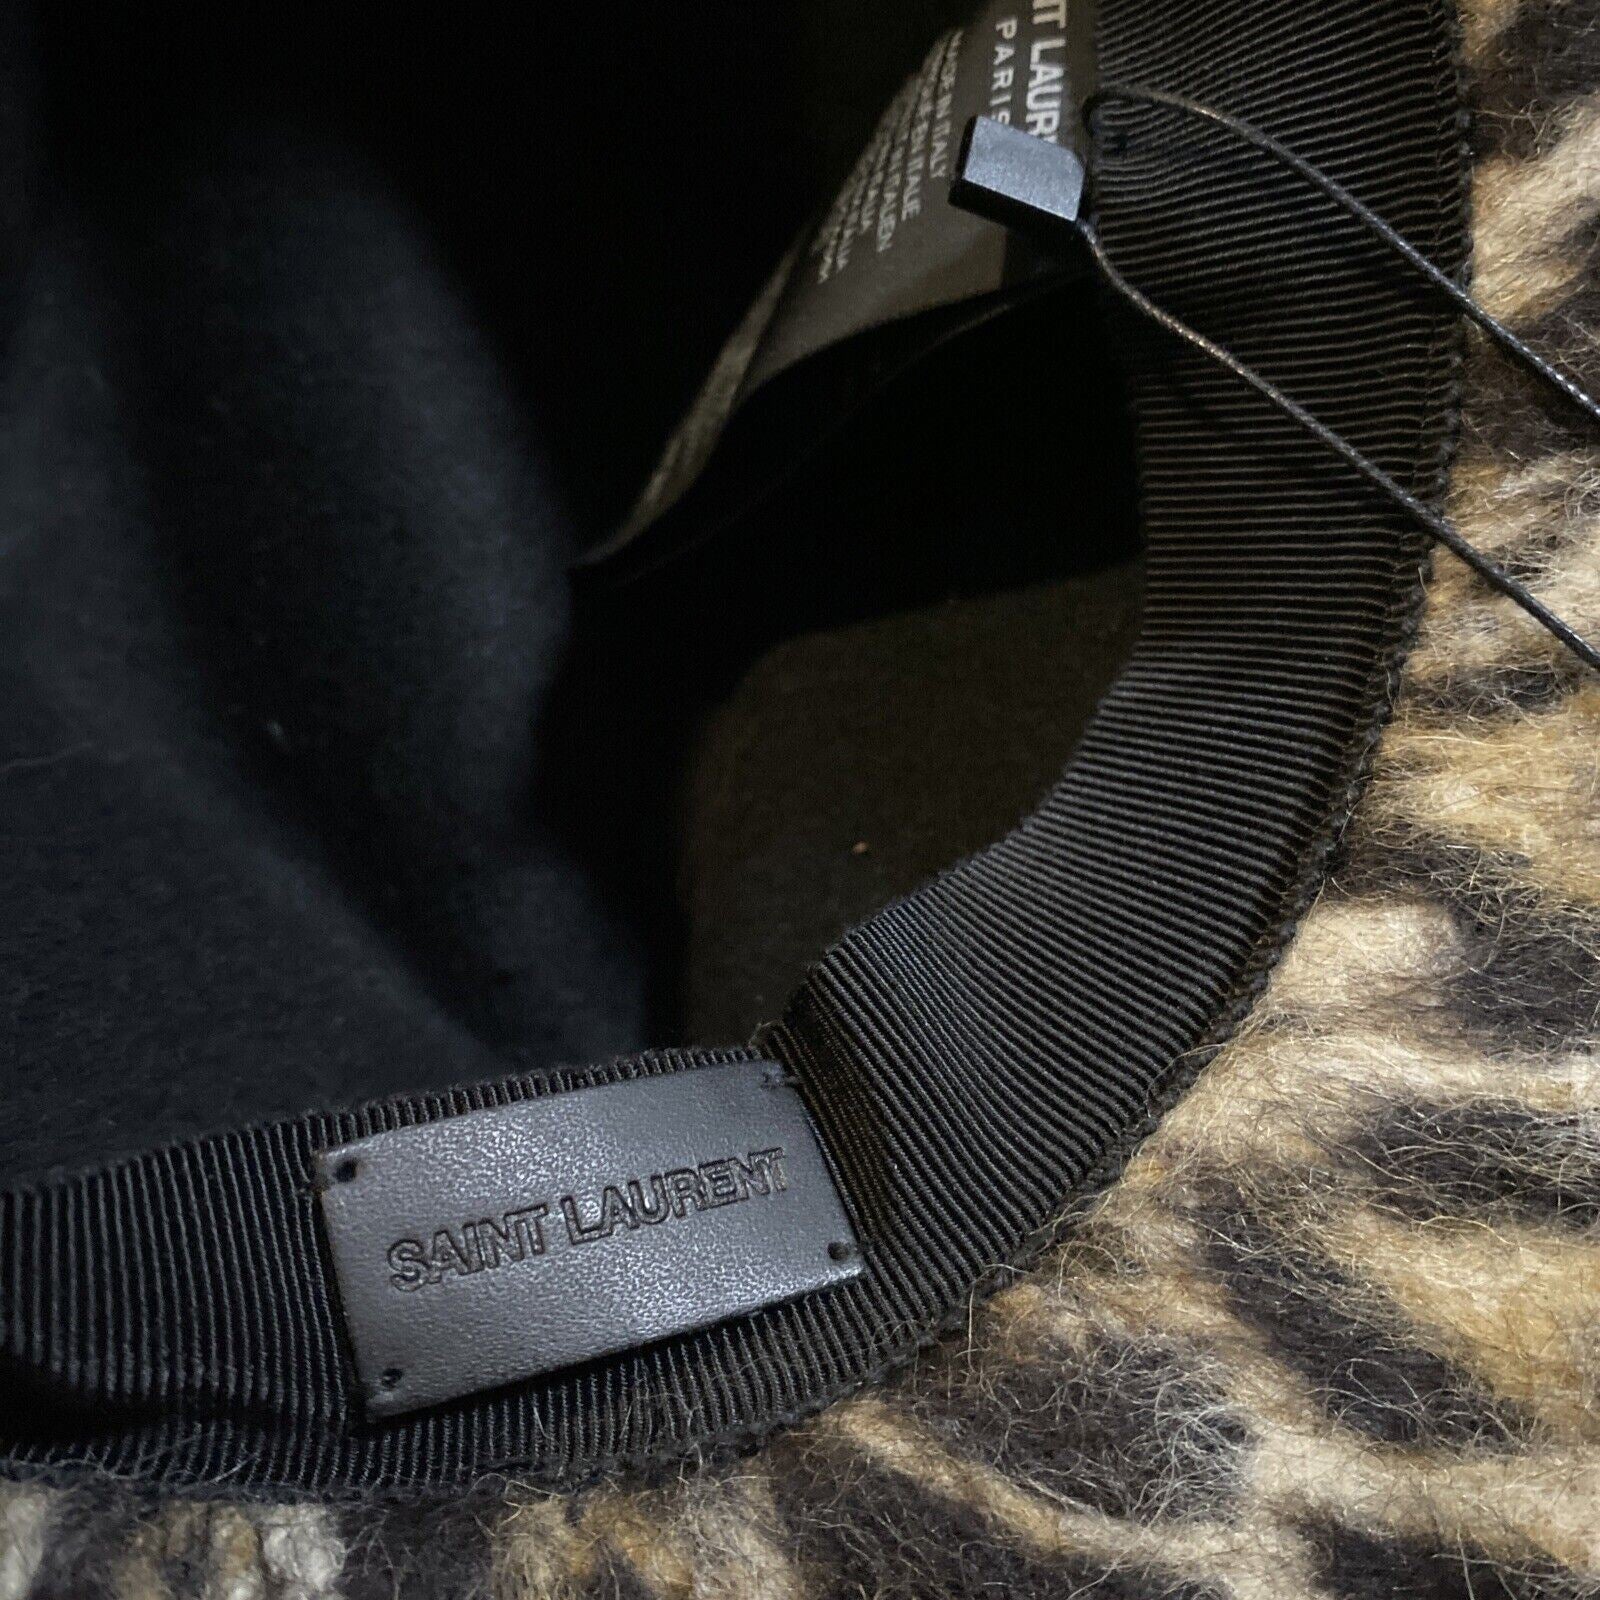 NWT $795 Женская шляпа-федора Saint Laurent бежевого/черного цвета, размер L, Италия